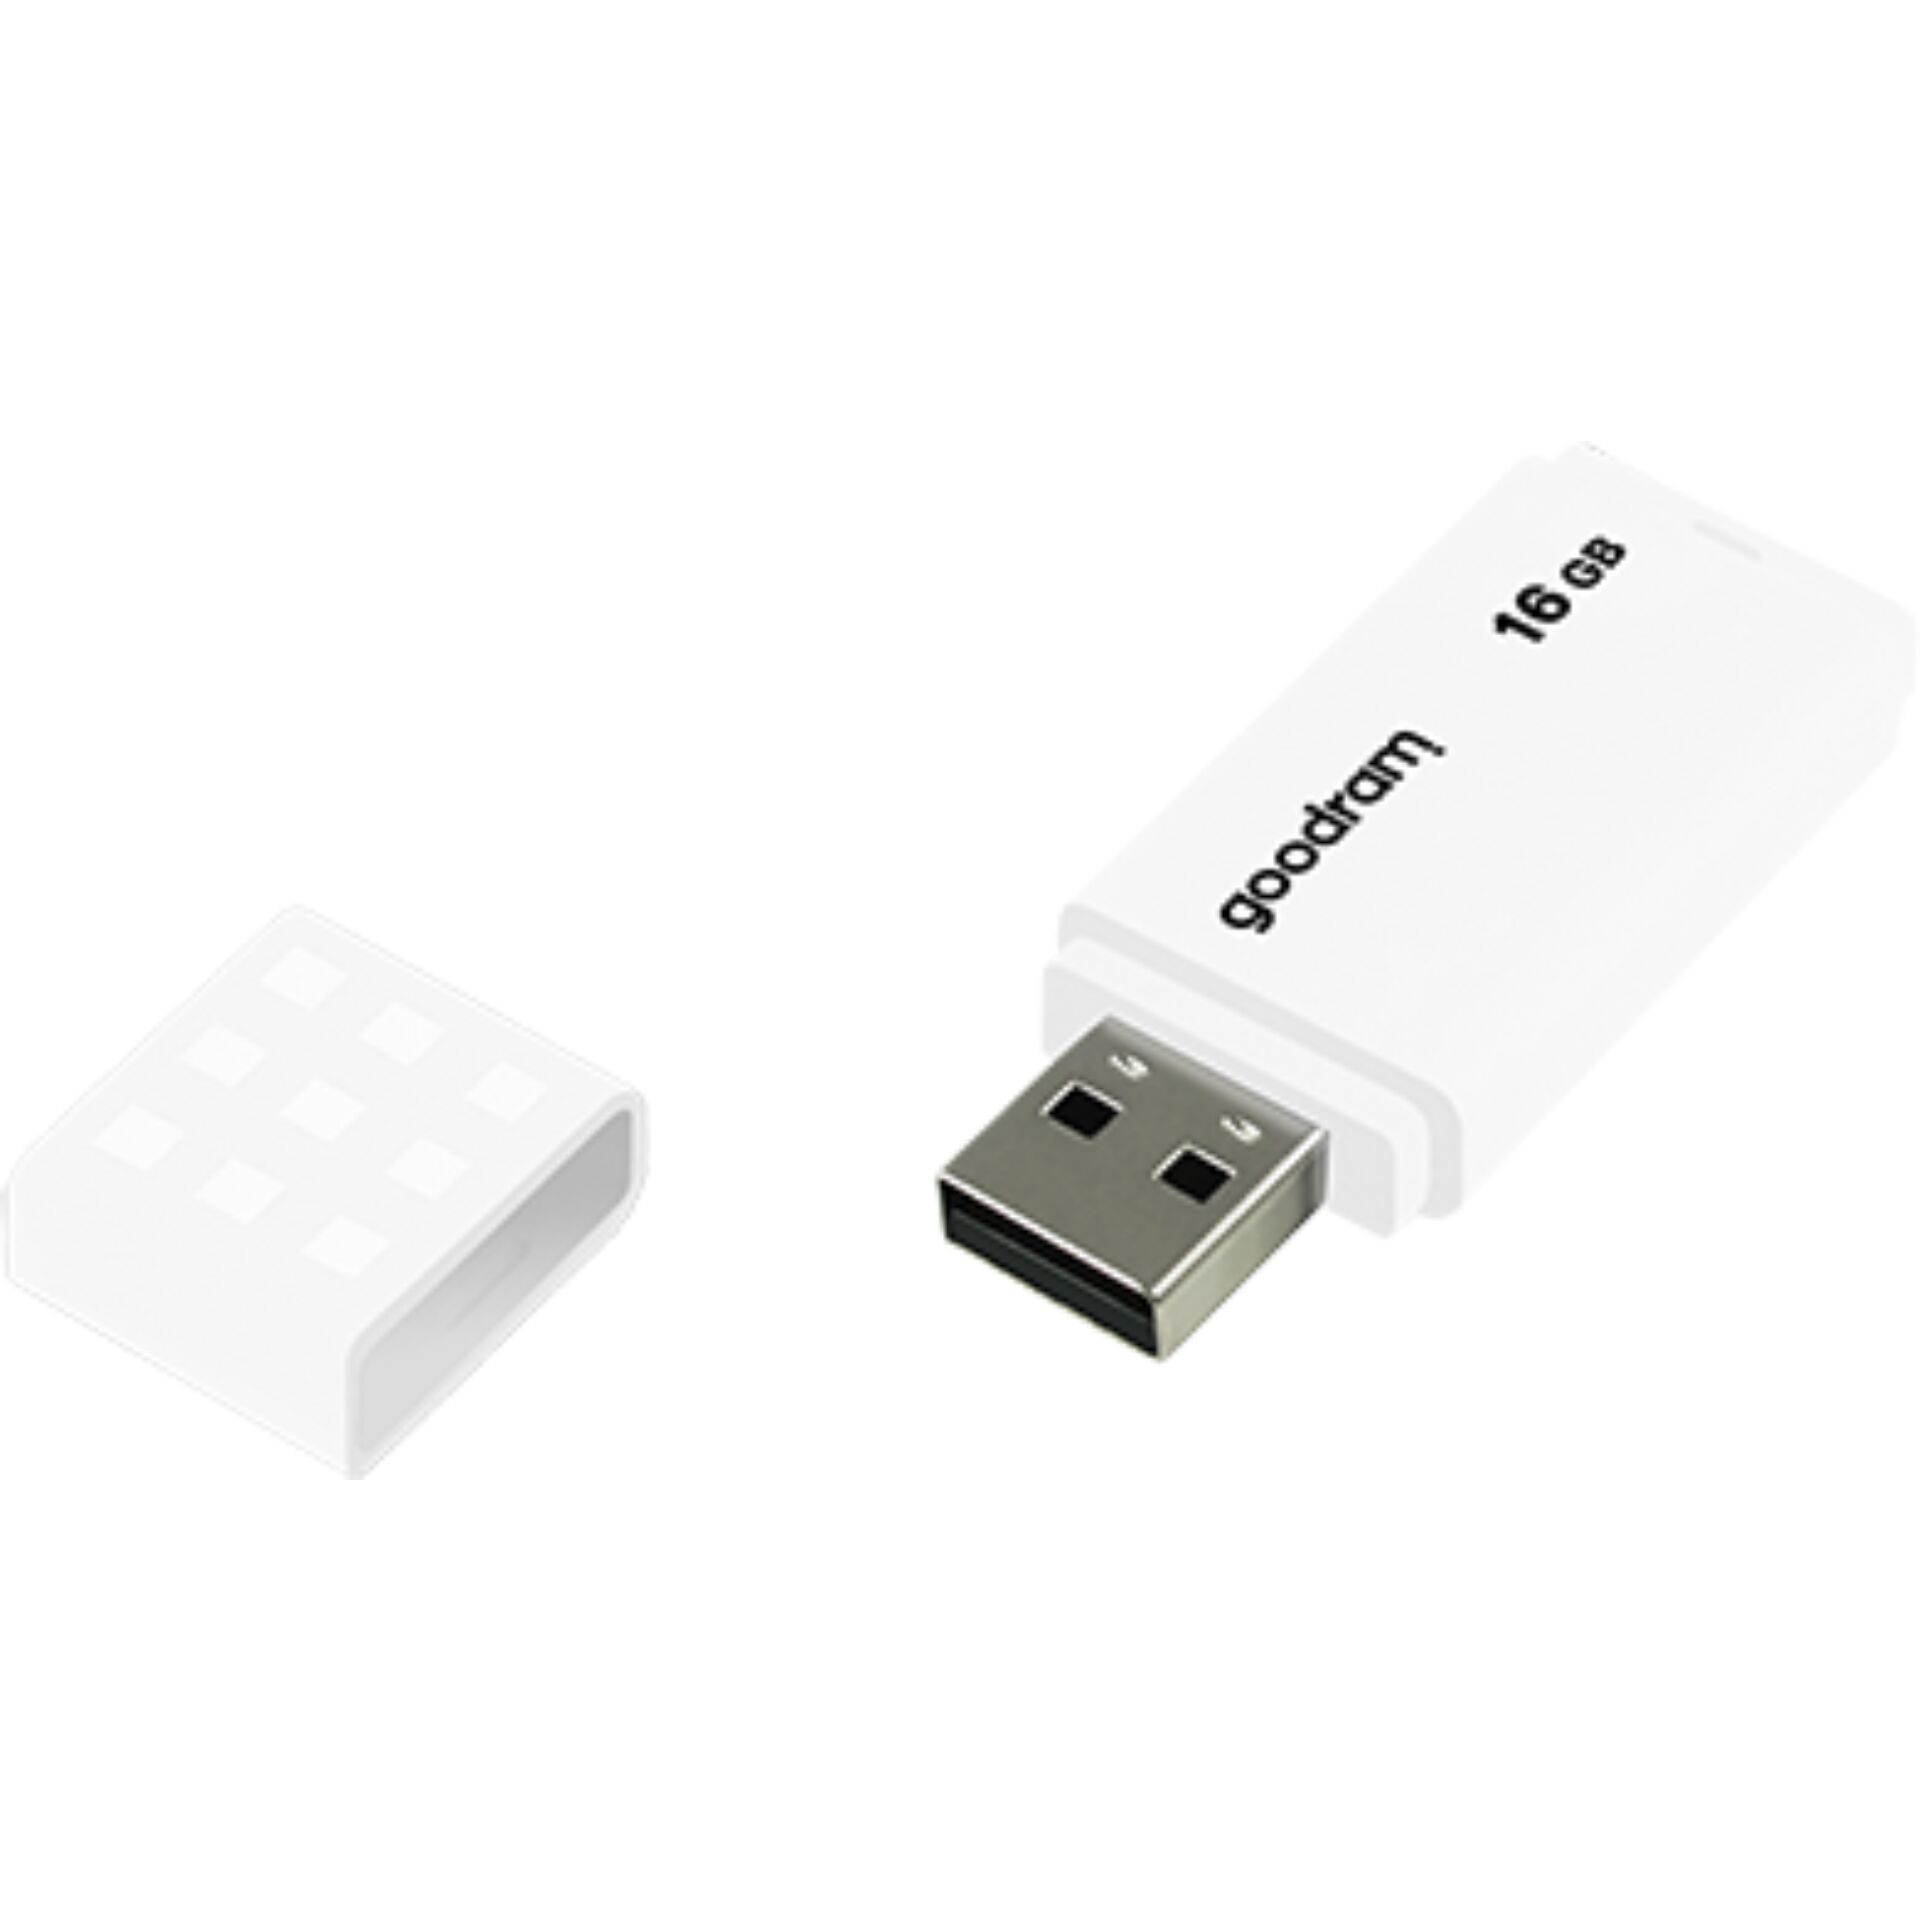 GOODRAM UME2 USB 2.0        16GB White